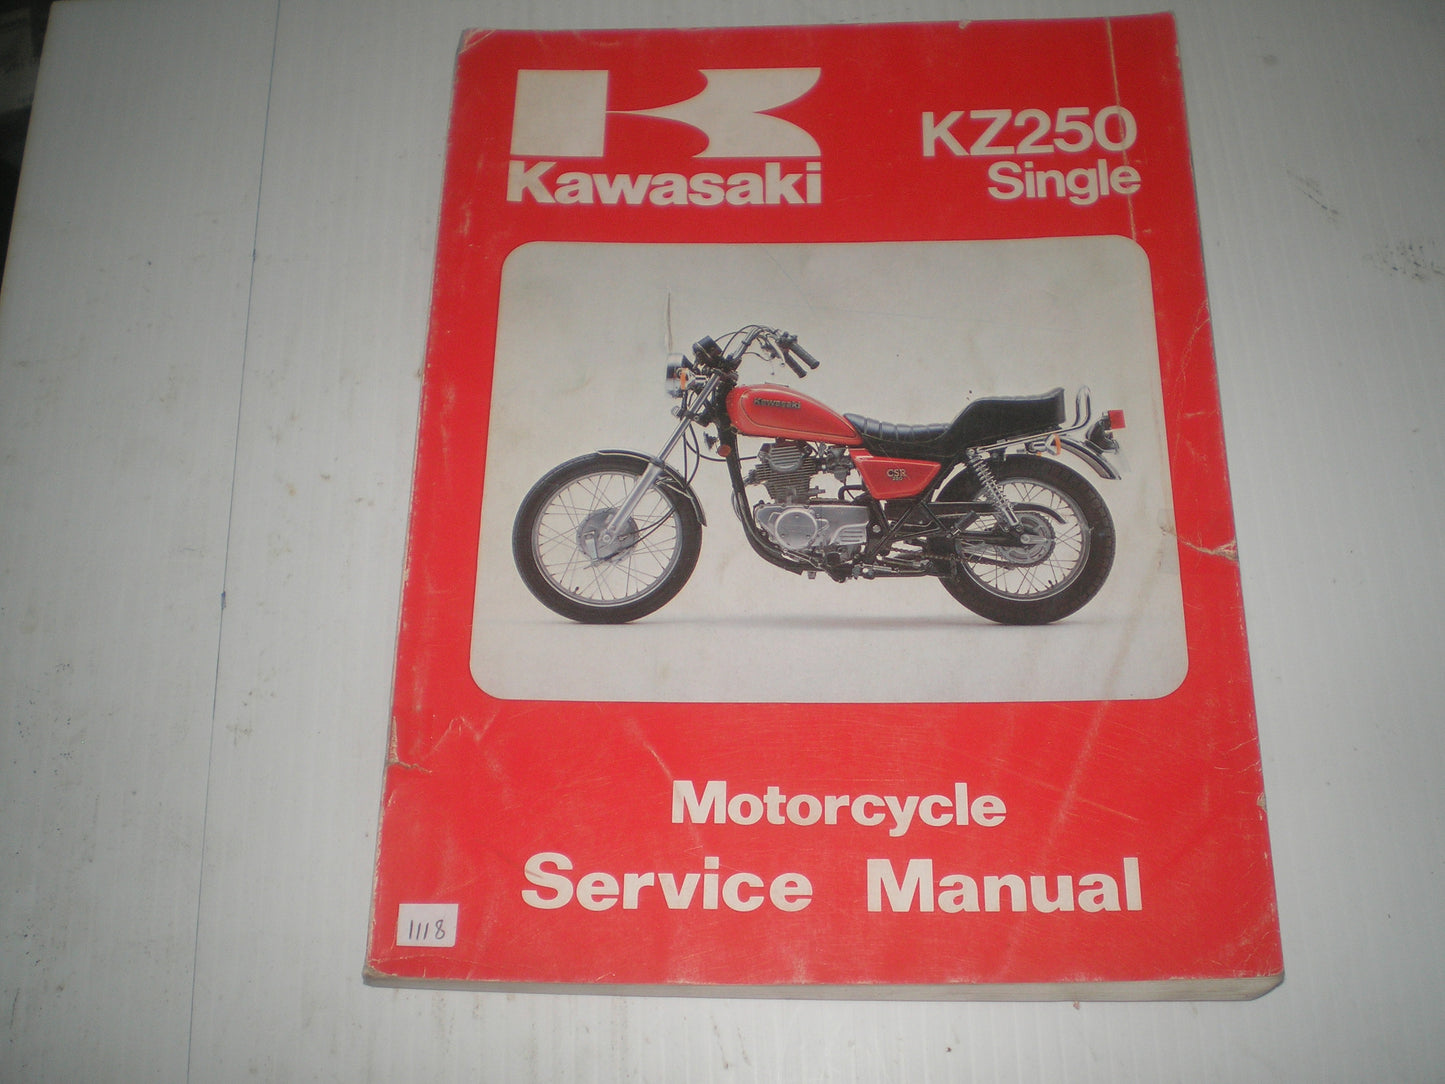 KAWASAKI KZ250  Z250  C1 C2 C3 D1 D2 G1 G2 G3 L1 M1 Single  1980 1981 1982  Service Manual  99924-1023-03  #1118